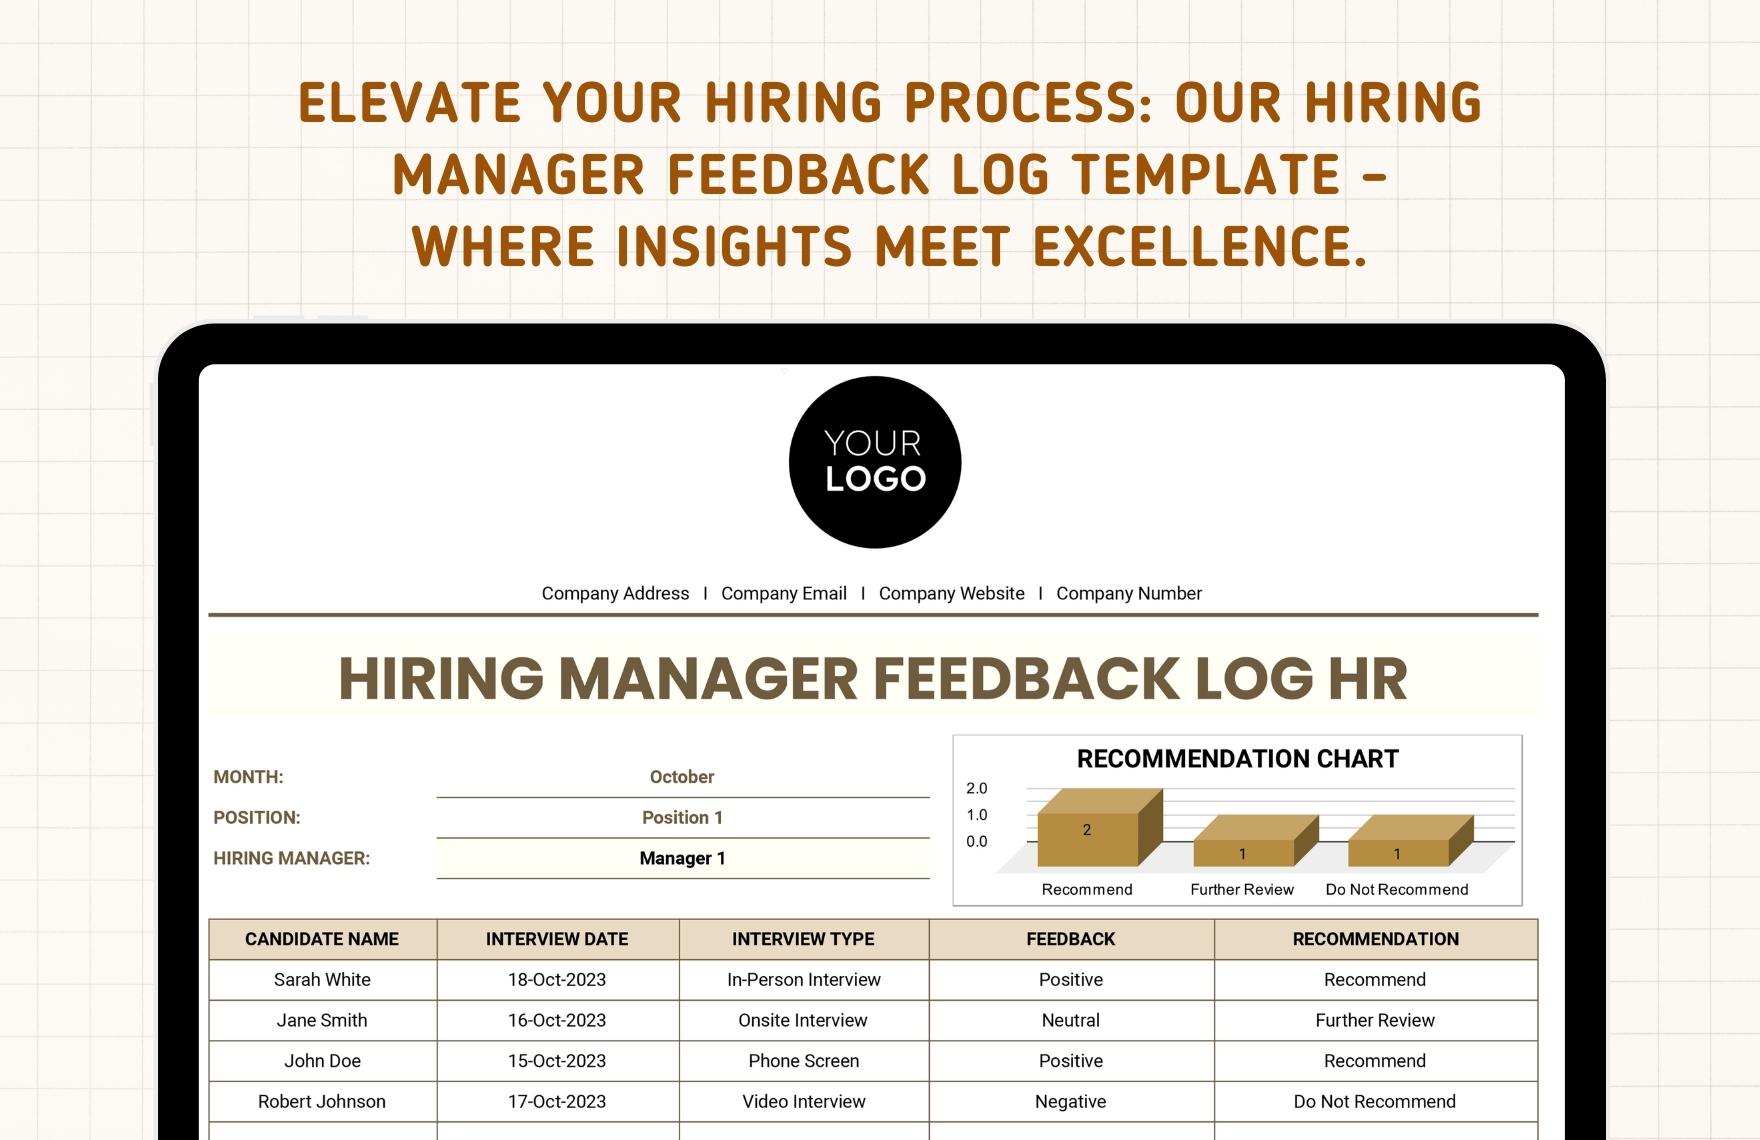 Hiring Manager Feedback Log HR Template